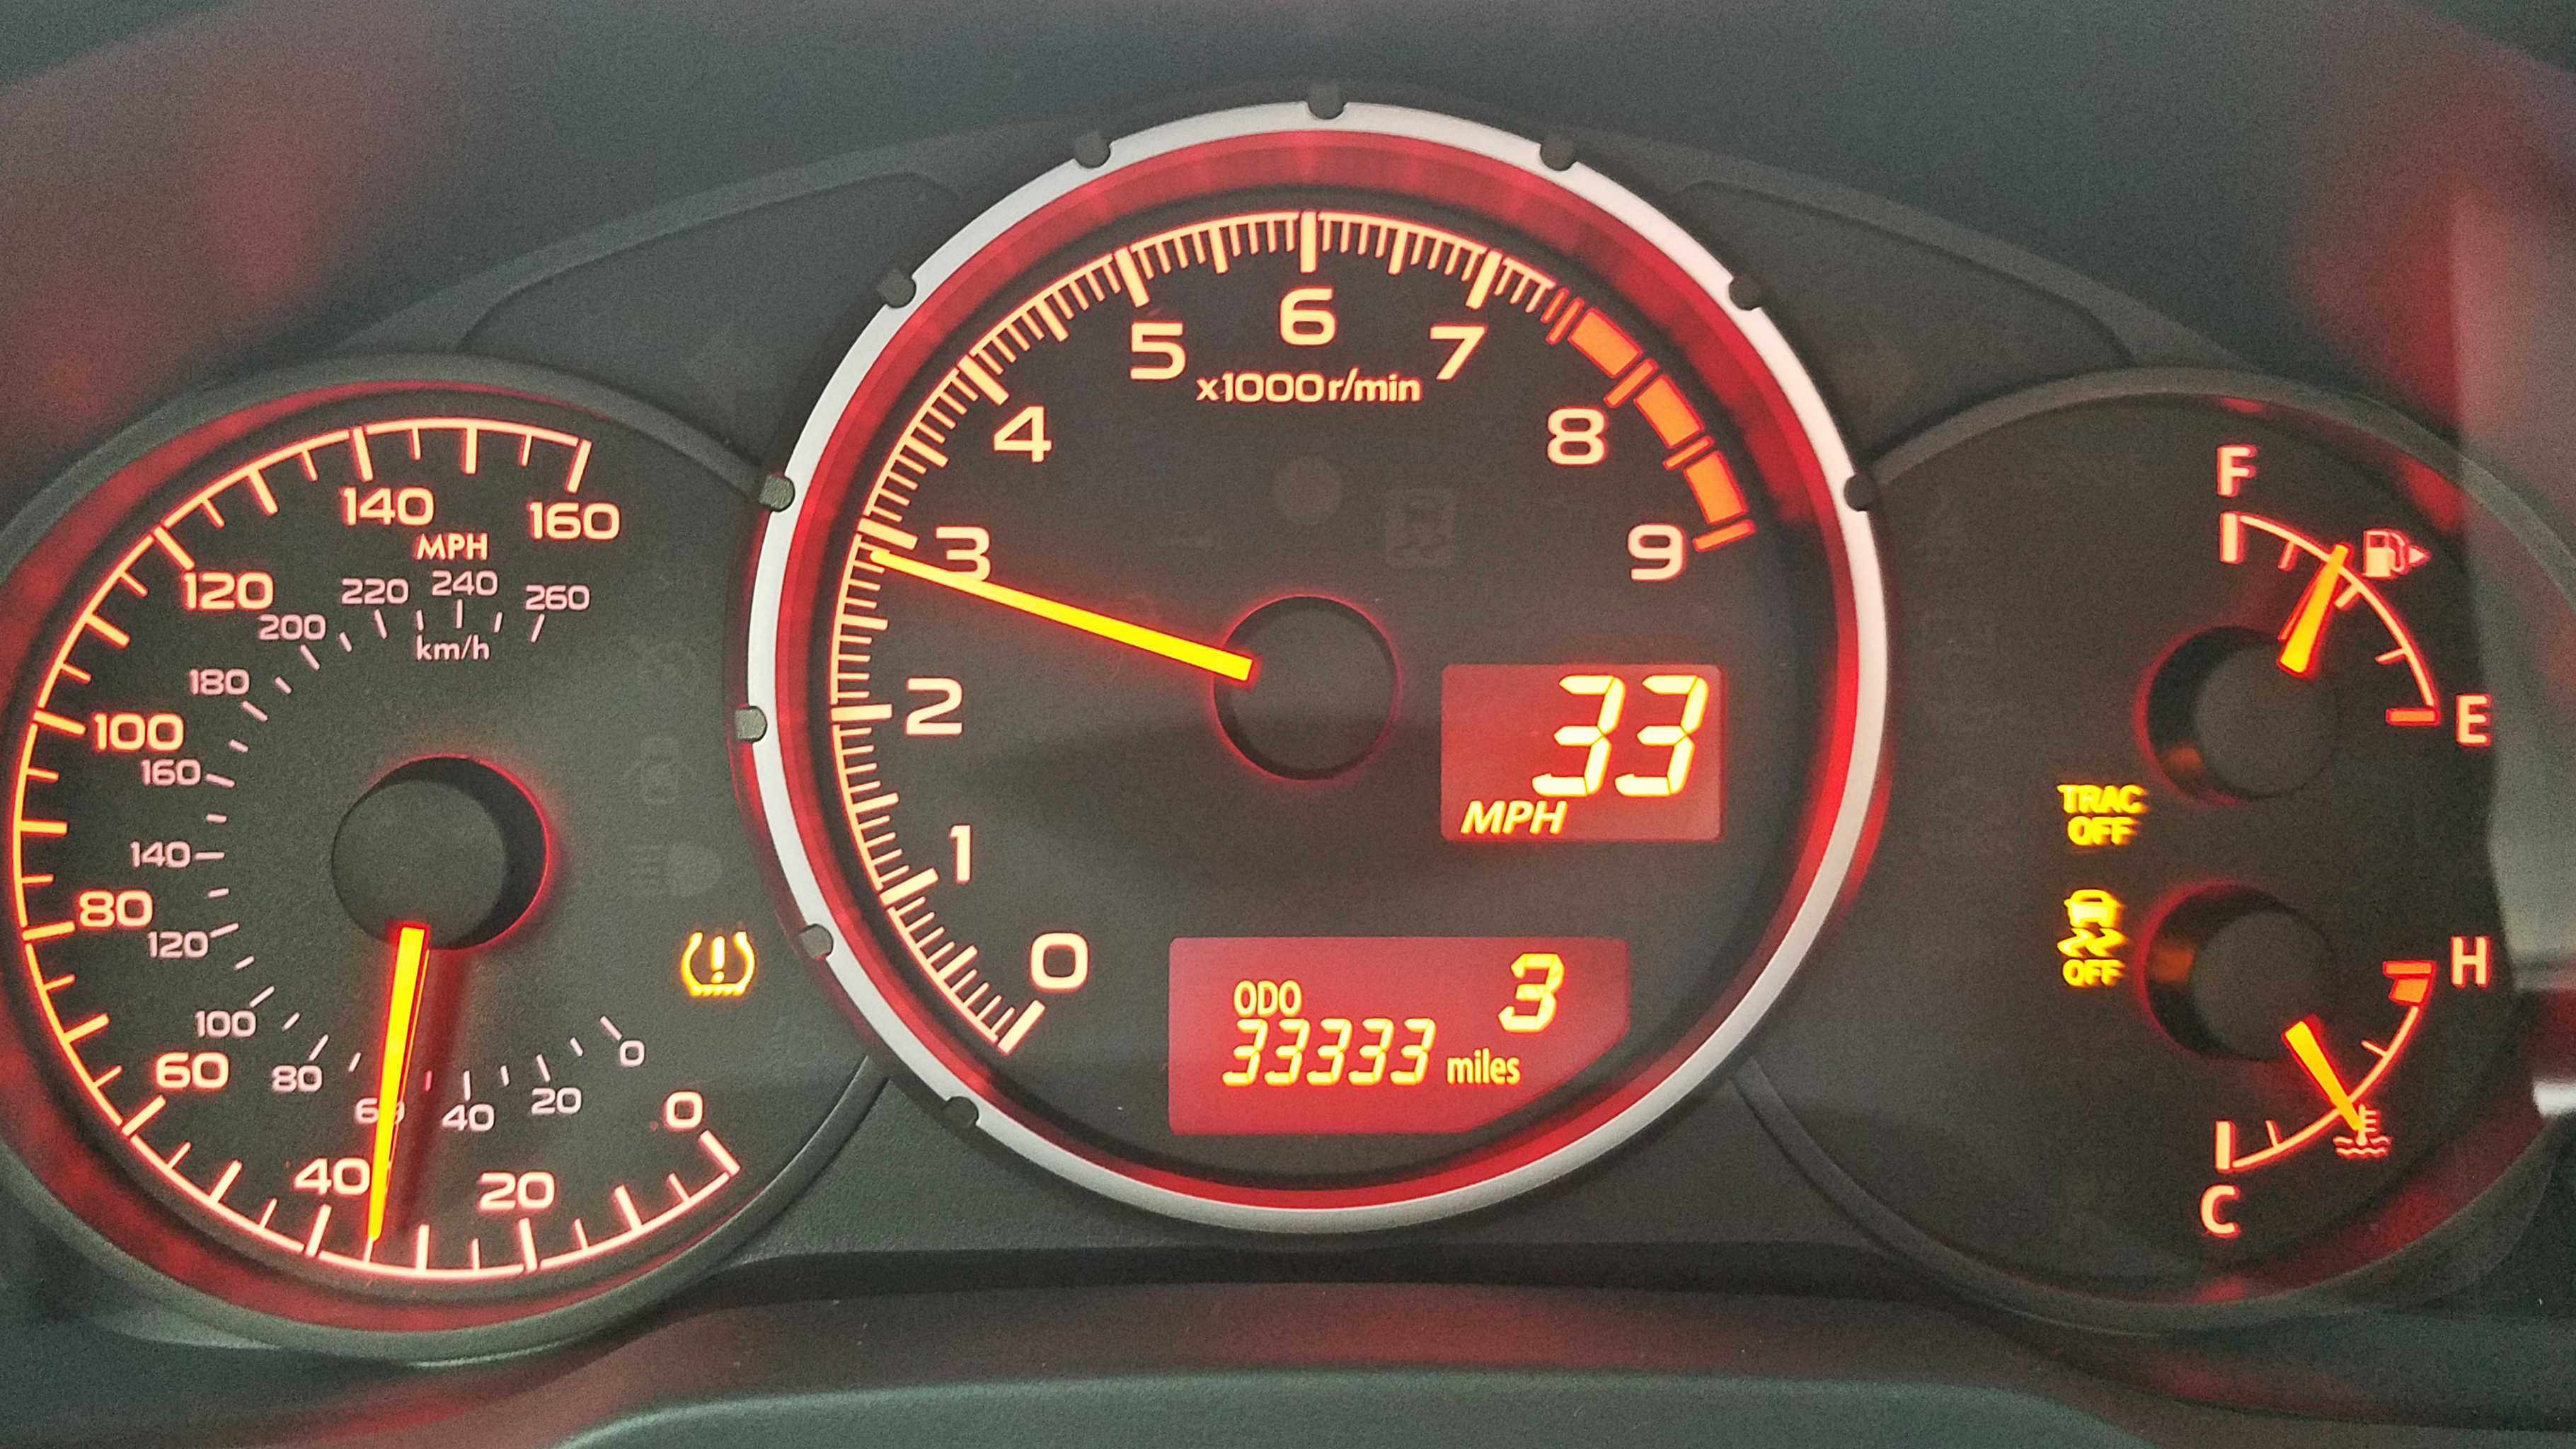 33,333 Miles, 3rd Gear, 33 MPH